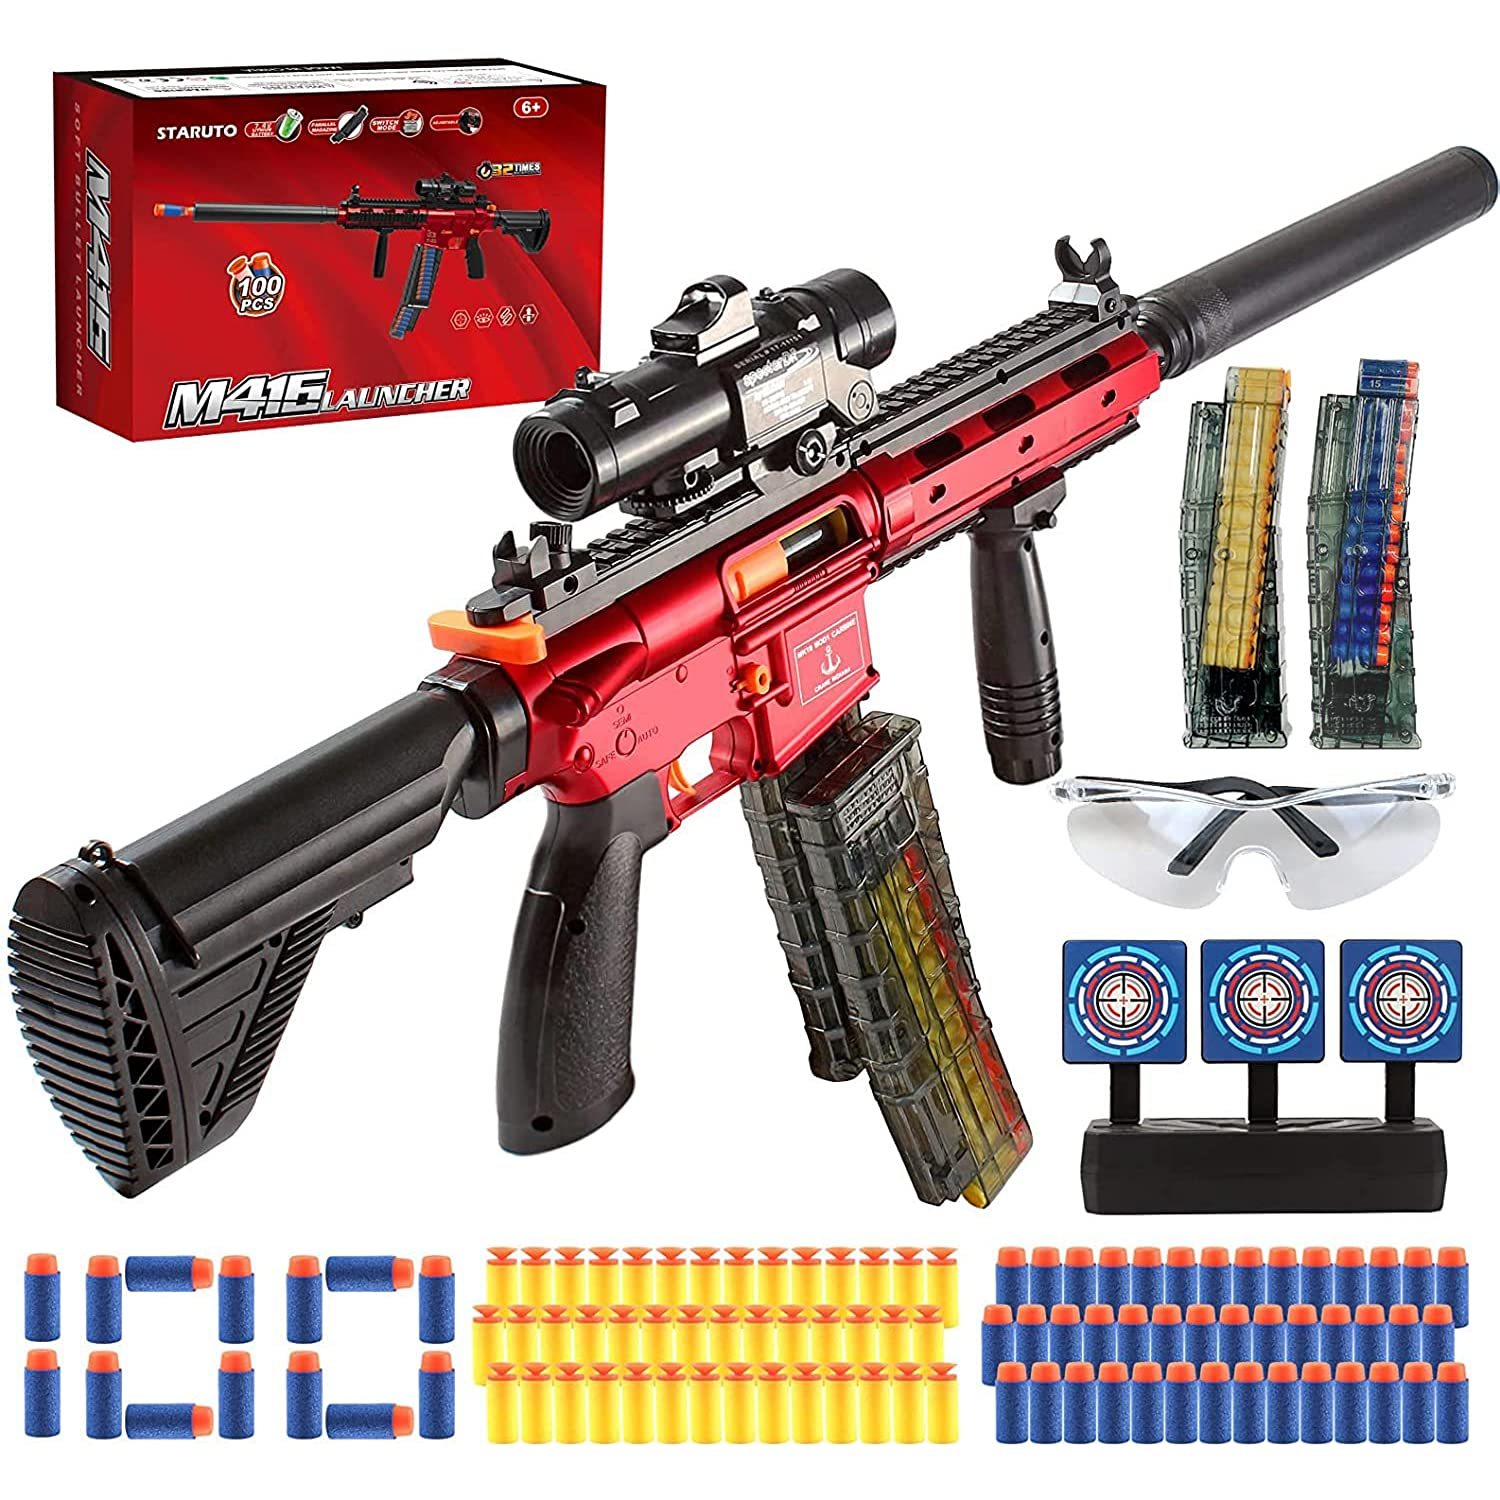 Automatic Toy Guns for Nerf Guns Automatic Toy Gun, M416 Auto-Manual Soft Toy Gu